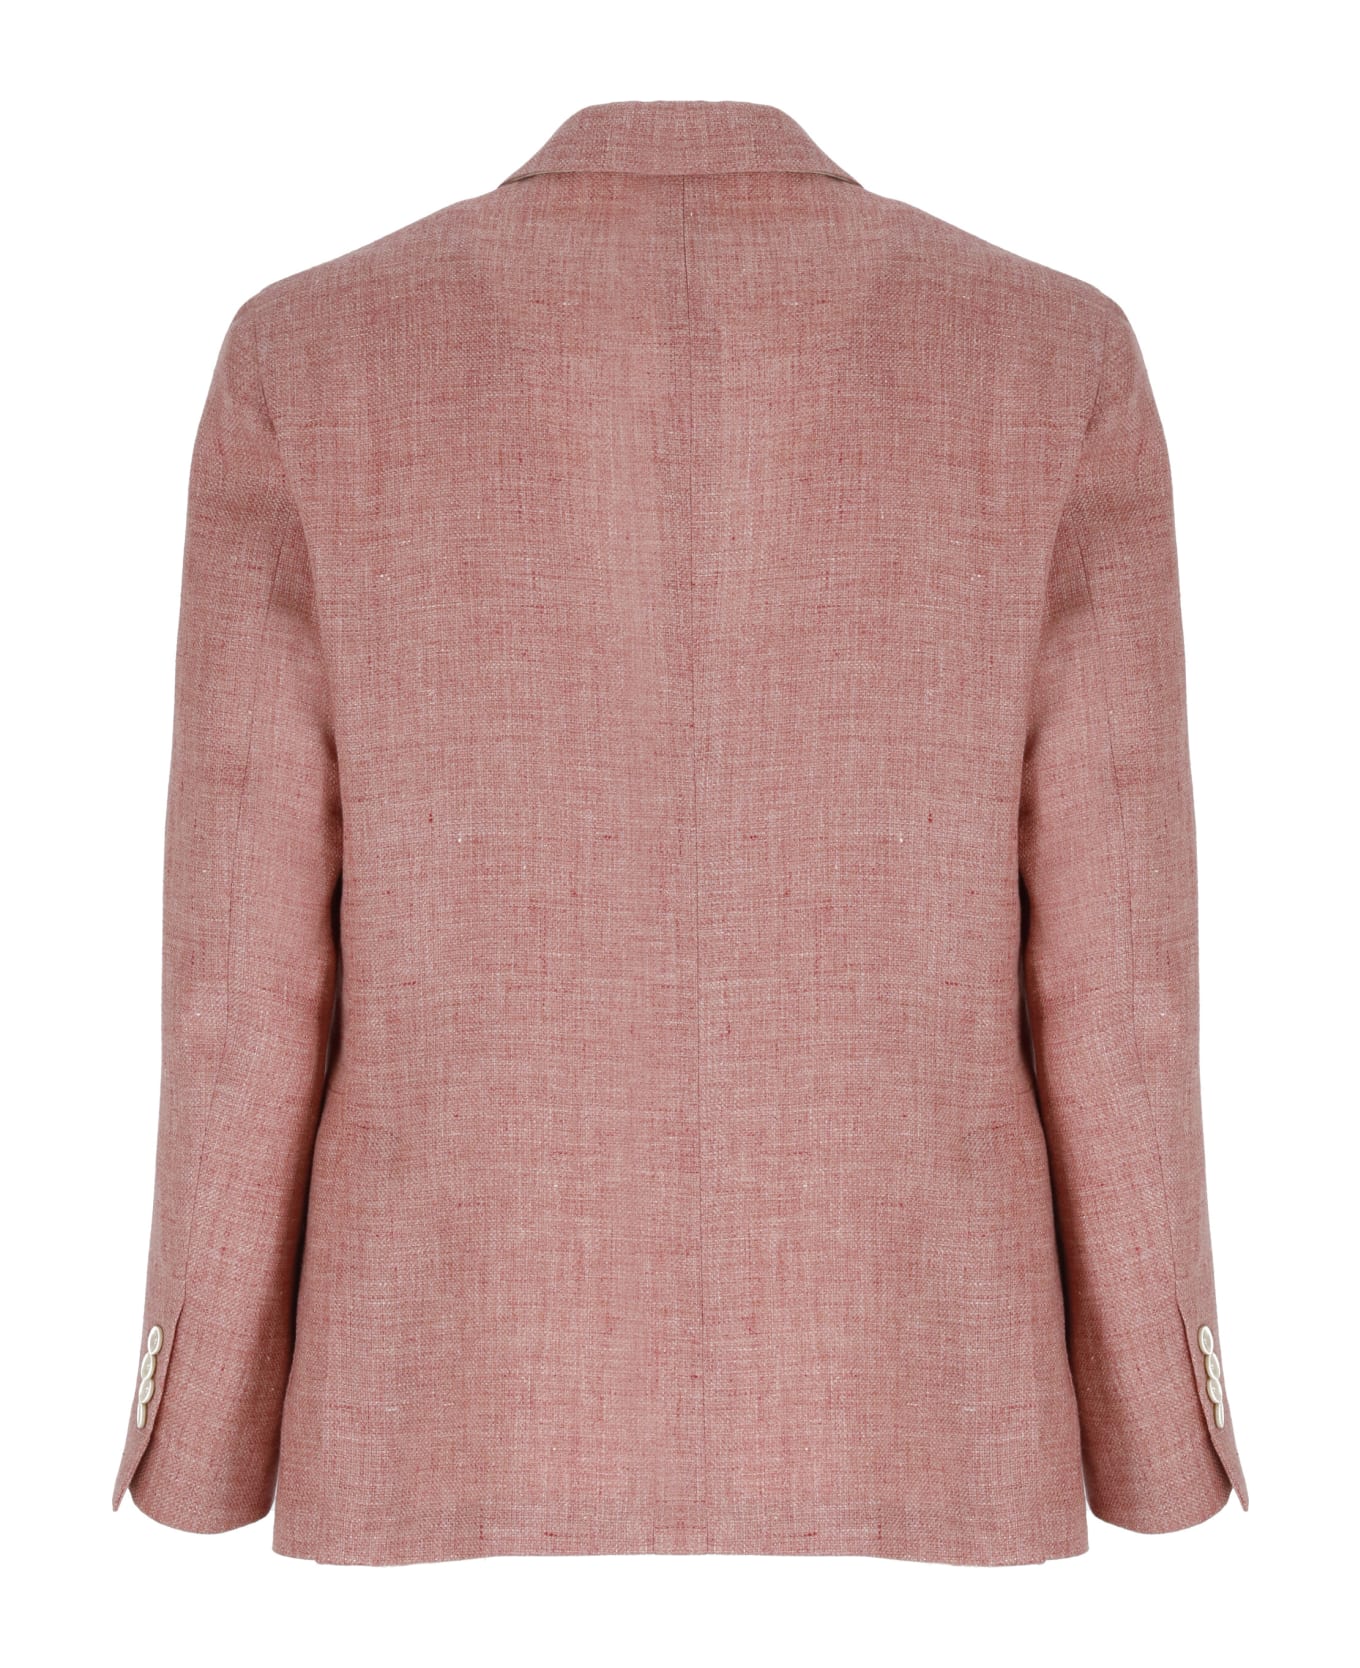 Lardini Linen And Cotton Jacket - Pink ブレザー